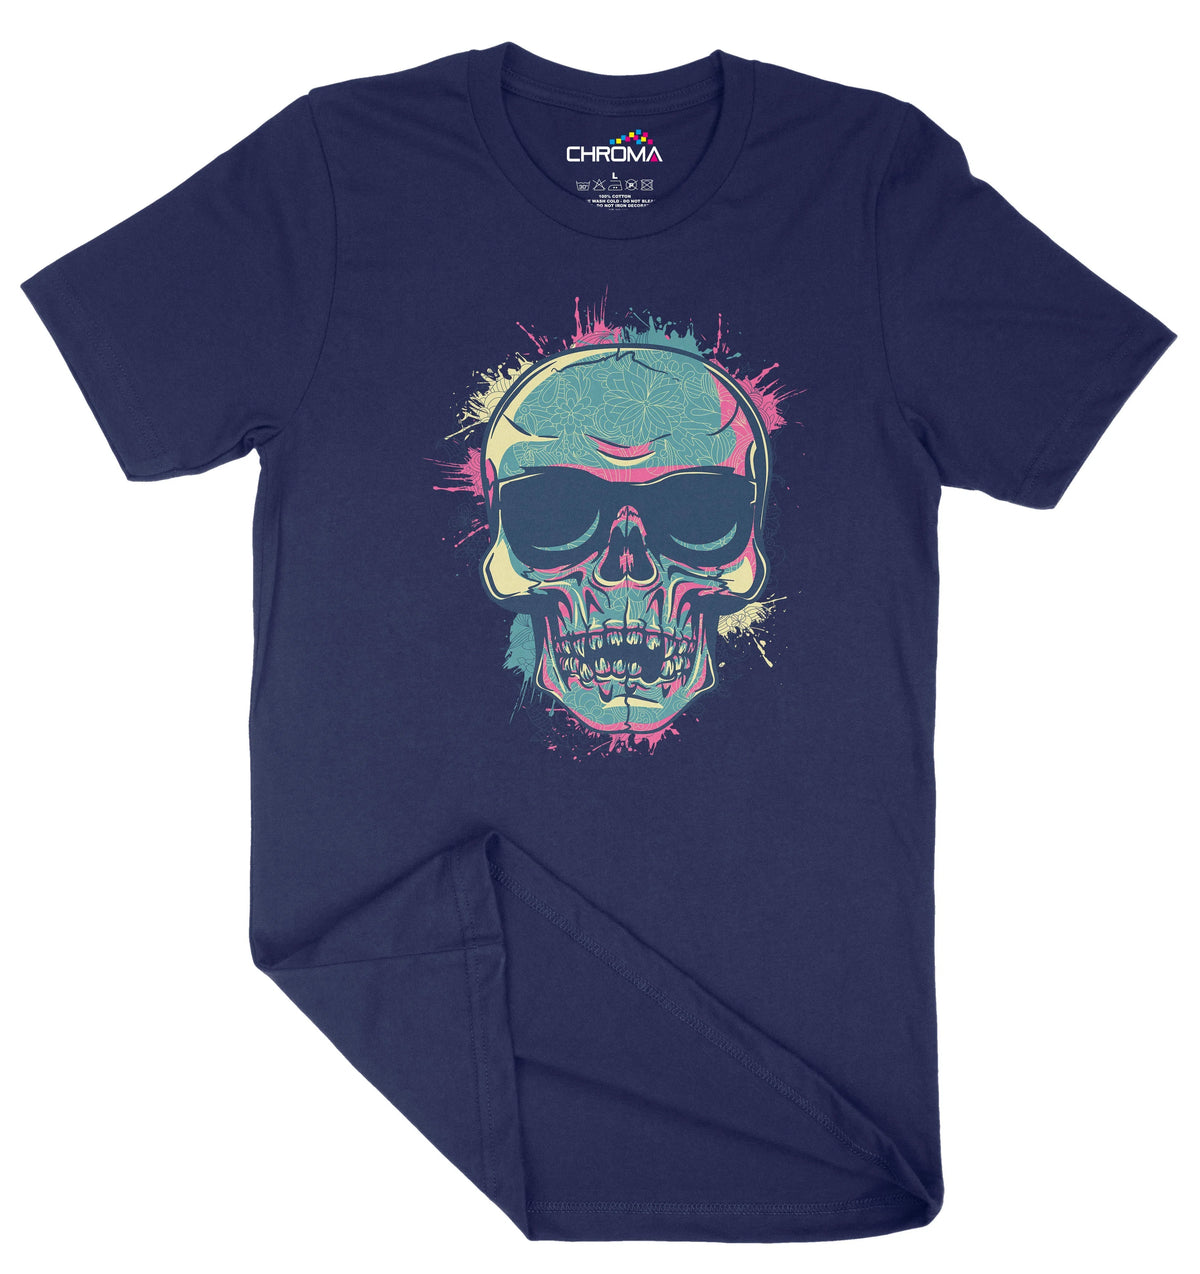 Pastel Skull Unisex Adult T-Shirt | Premium Quality Streetwear Chroma Clothing